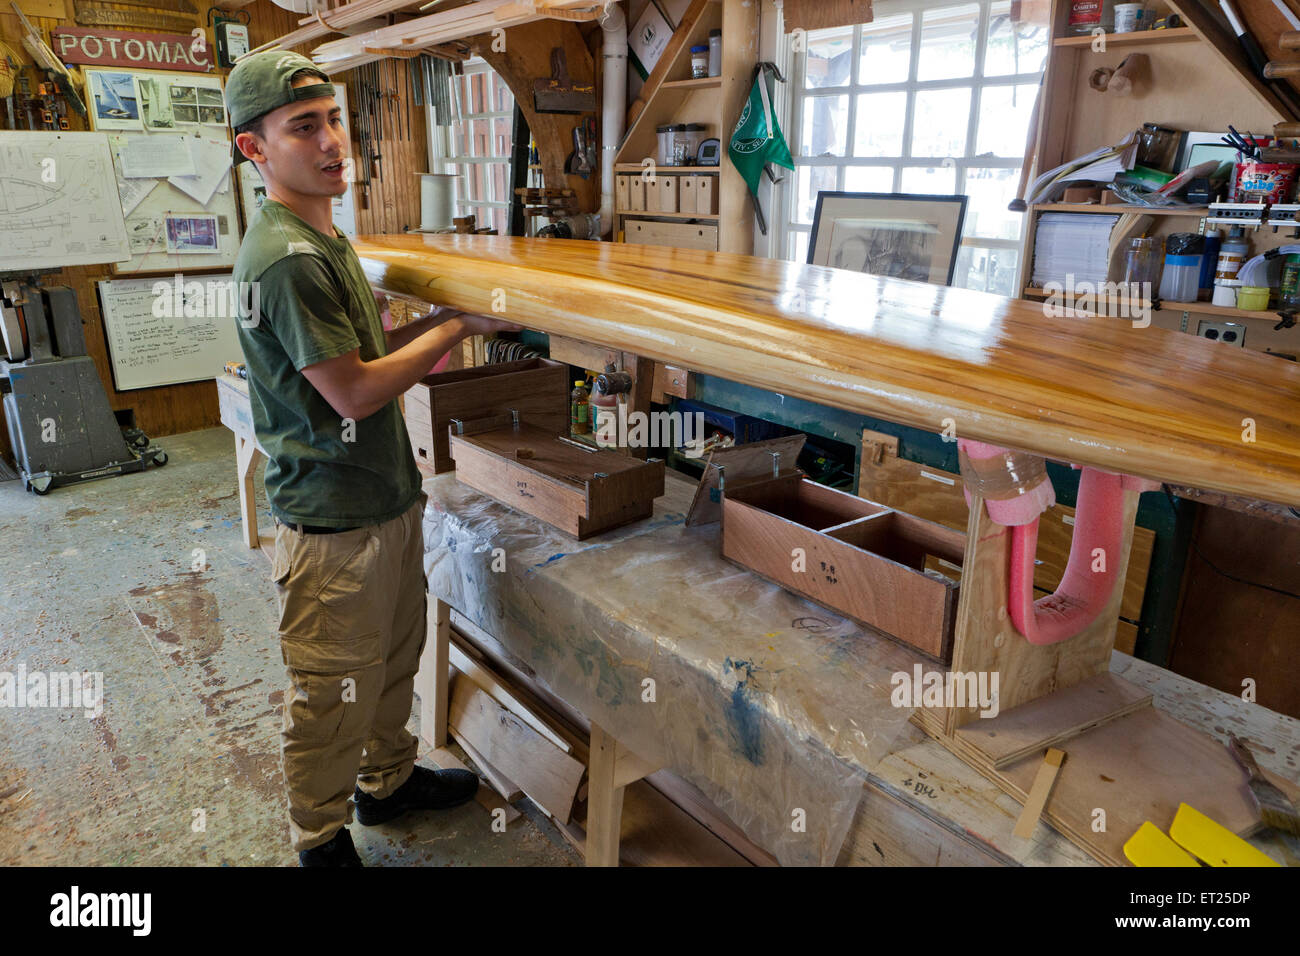 Man building a wooden surfboard - USA Stock Photo